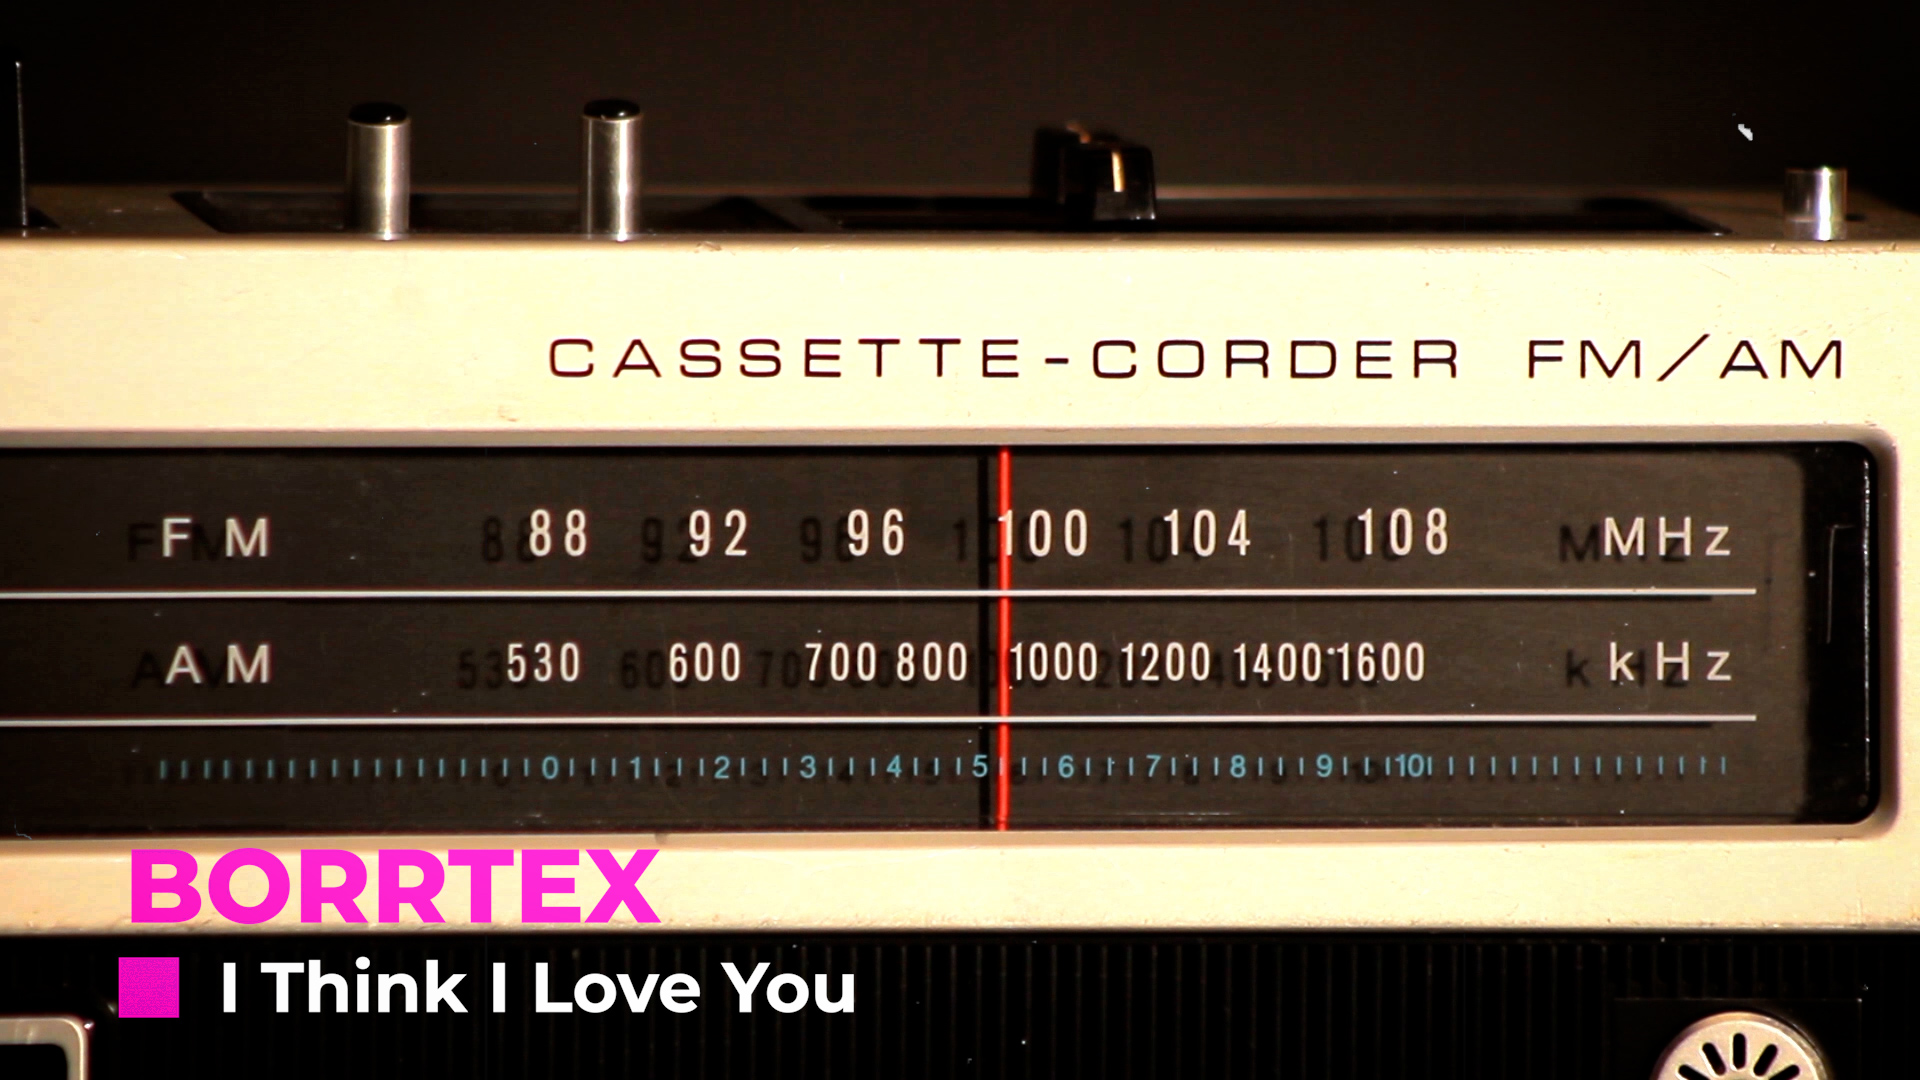 Borrtex - I Think I Love You (Ambient,Cinematic,Holiday,Fantasy)
Музыка без авторских прав